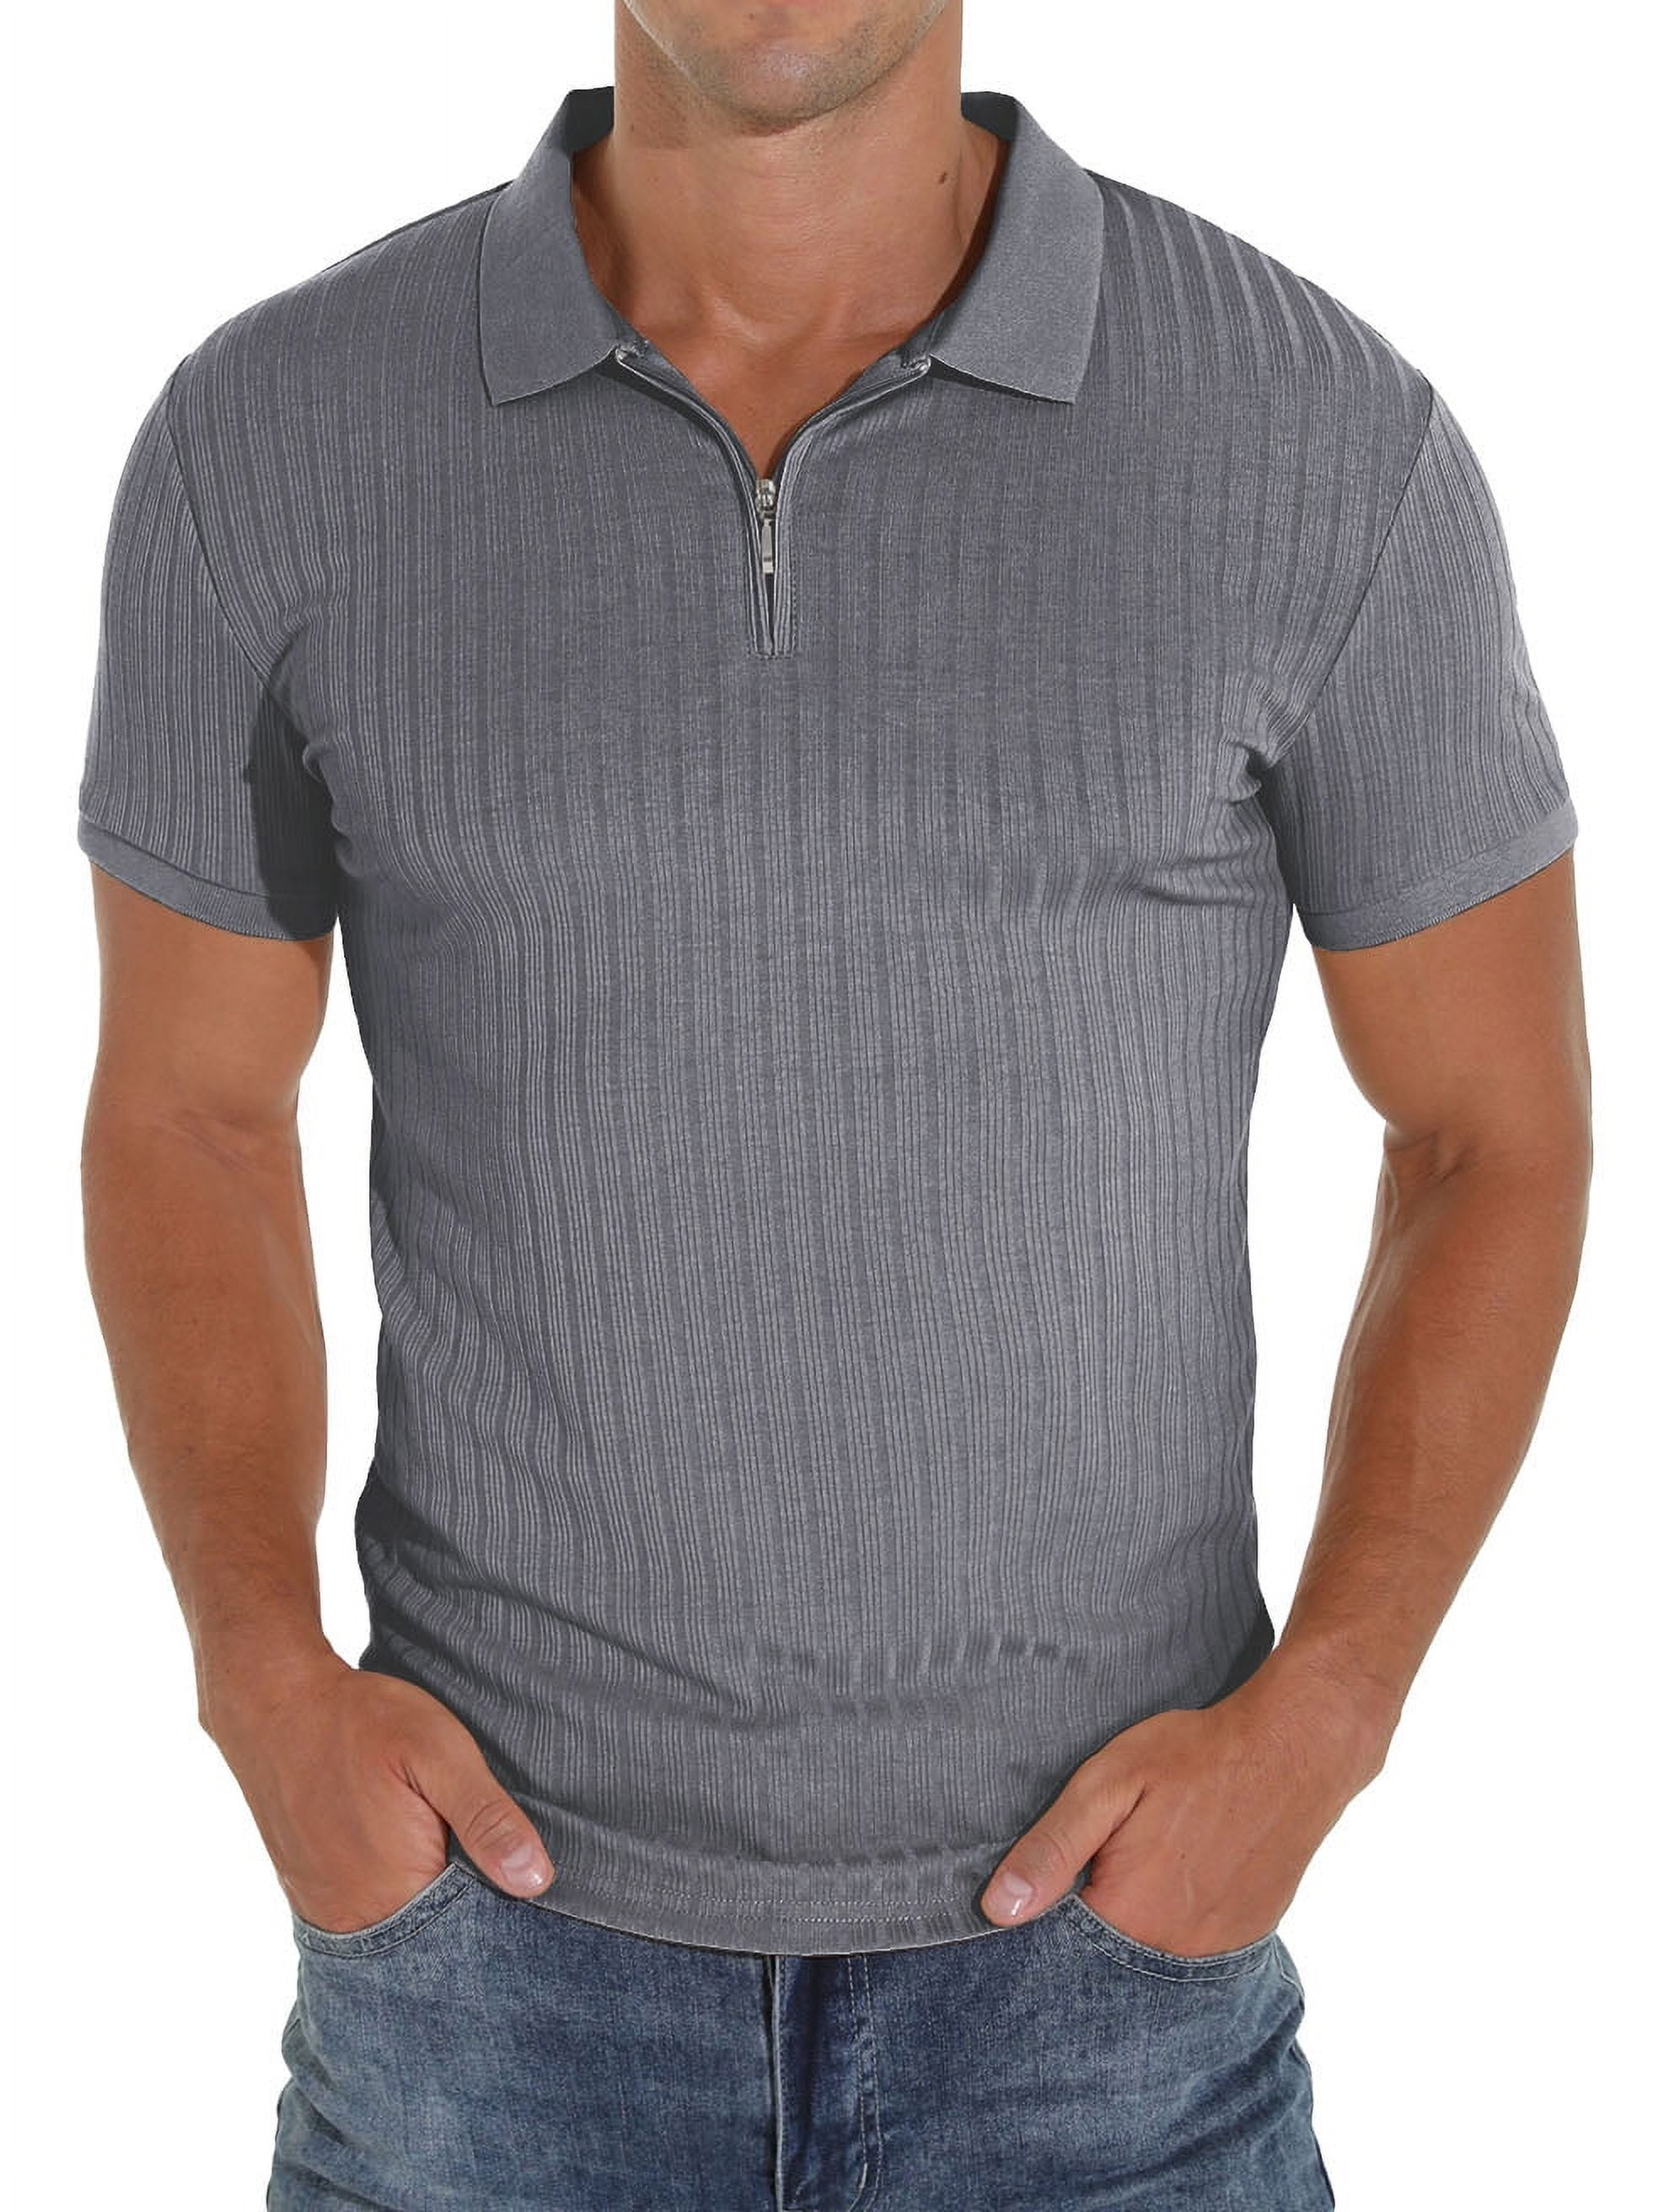 GIRUNS Zipper Polo Shirts for Men Short Sleeve Slim Fit Shirts Casual ...